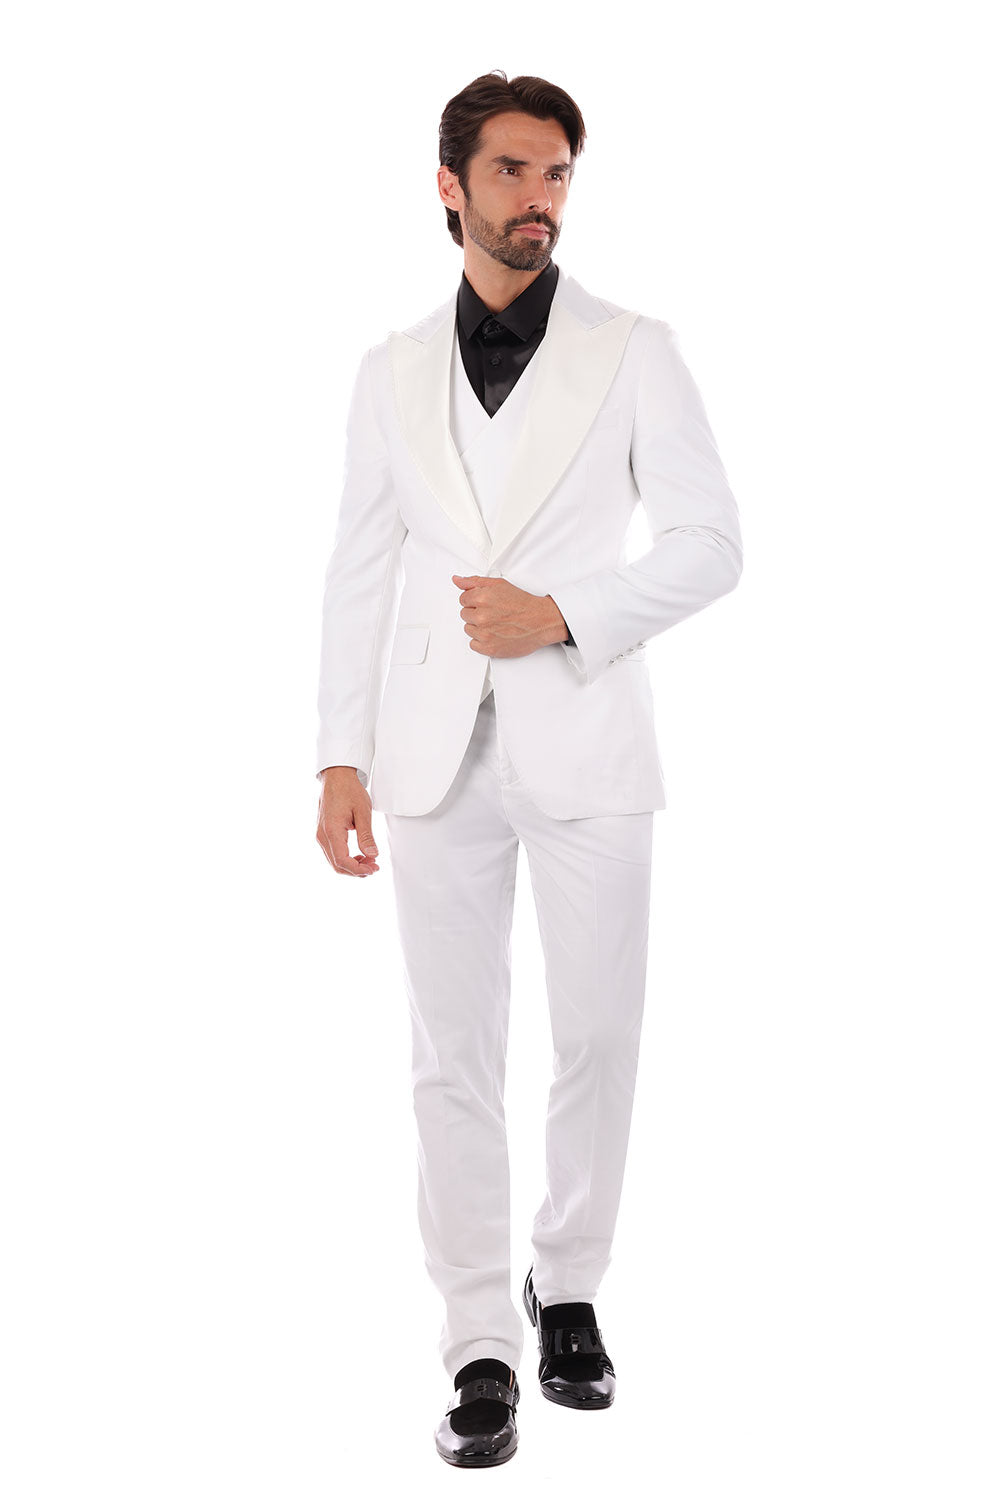 Barabas Men's Solid Color Peak Satin Lapel Suit Set 4SU13 White